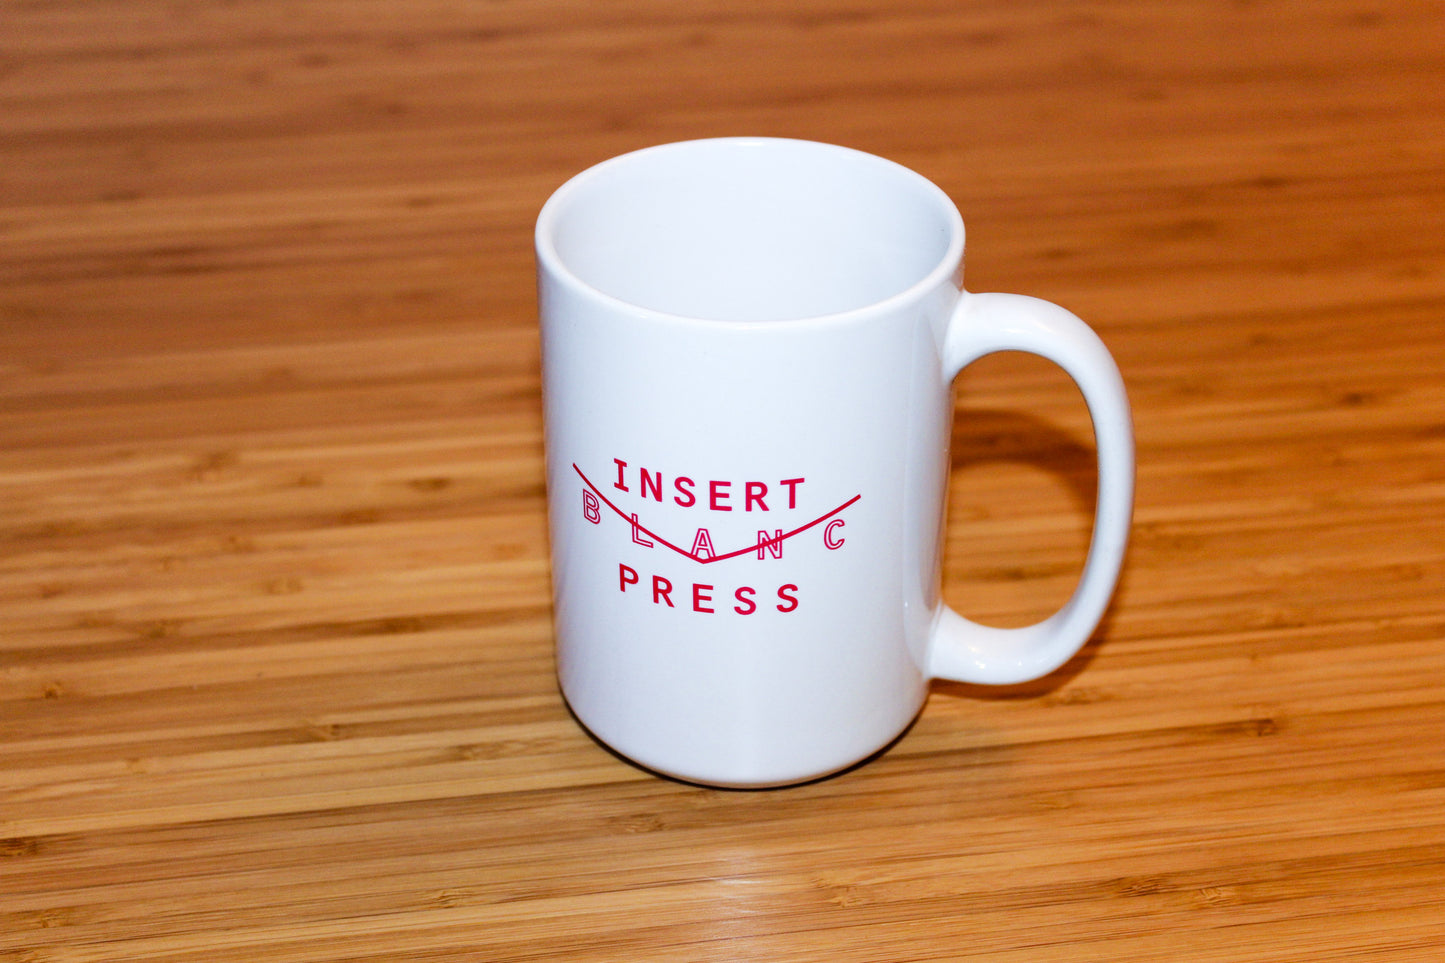 Insert Blanc Press Mug